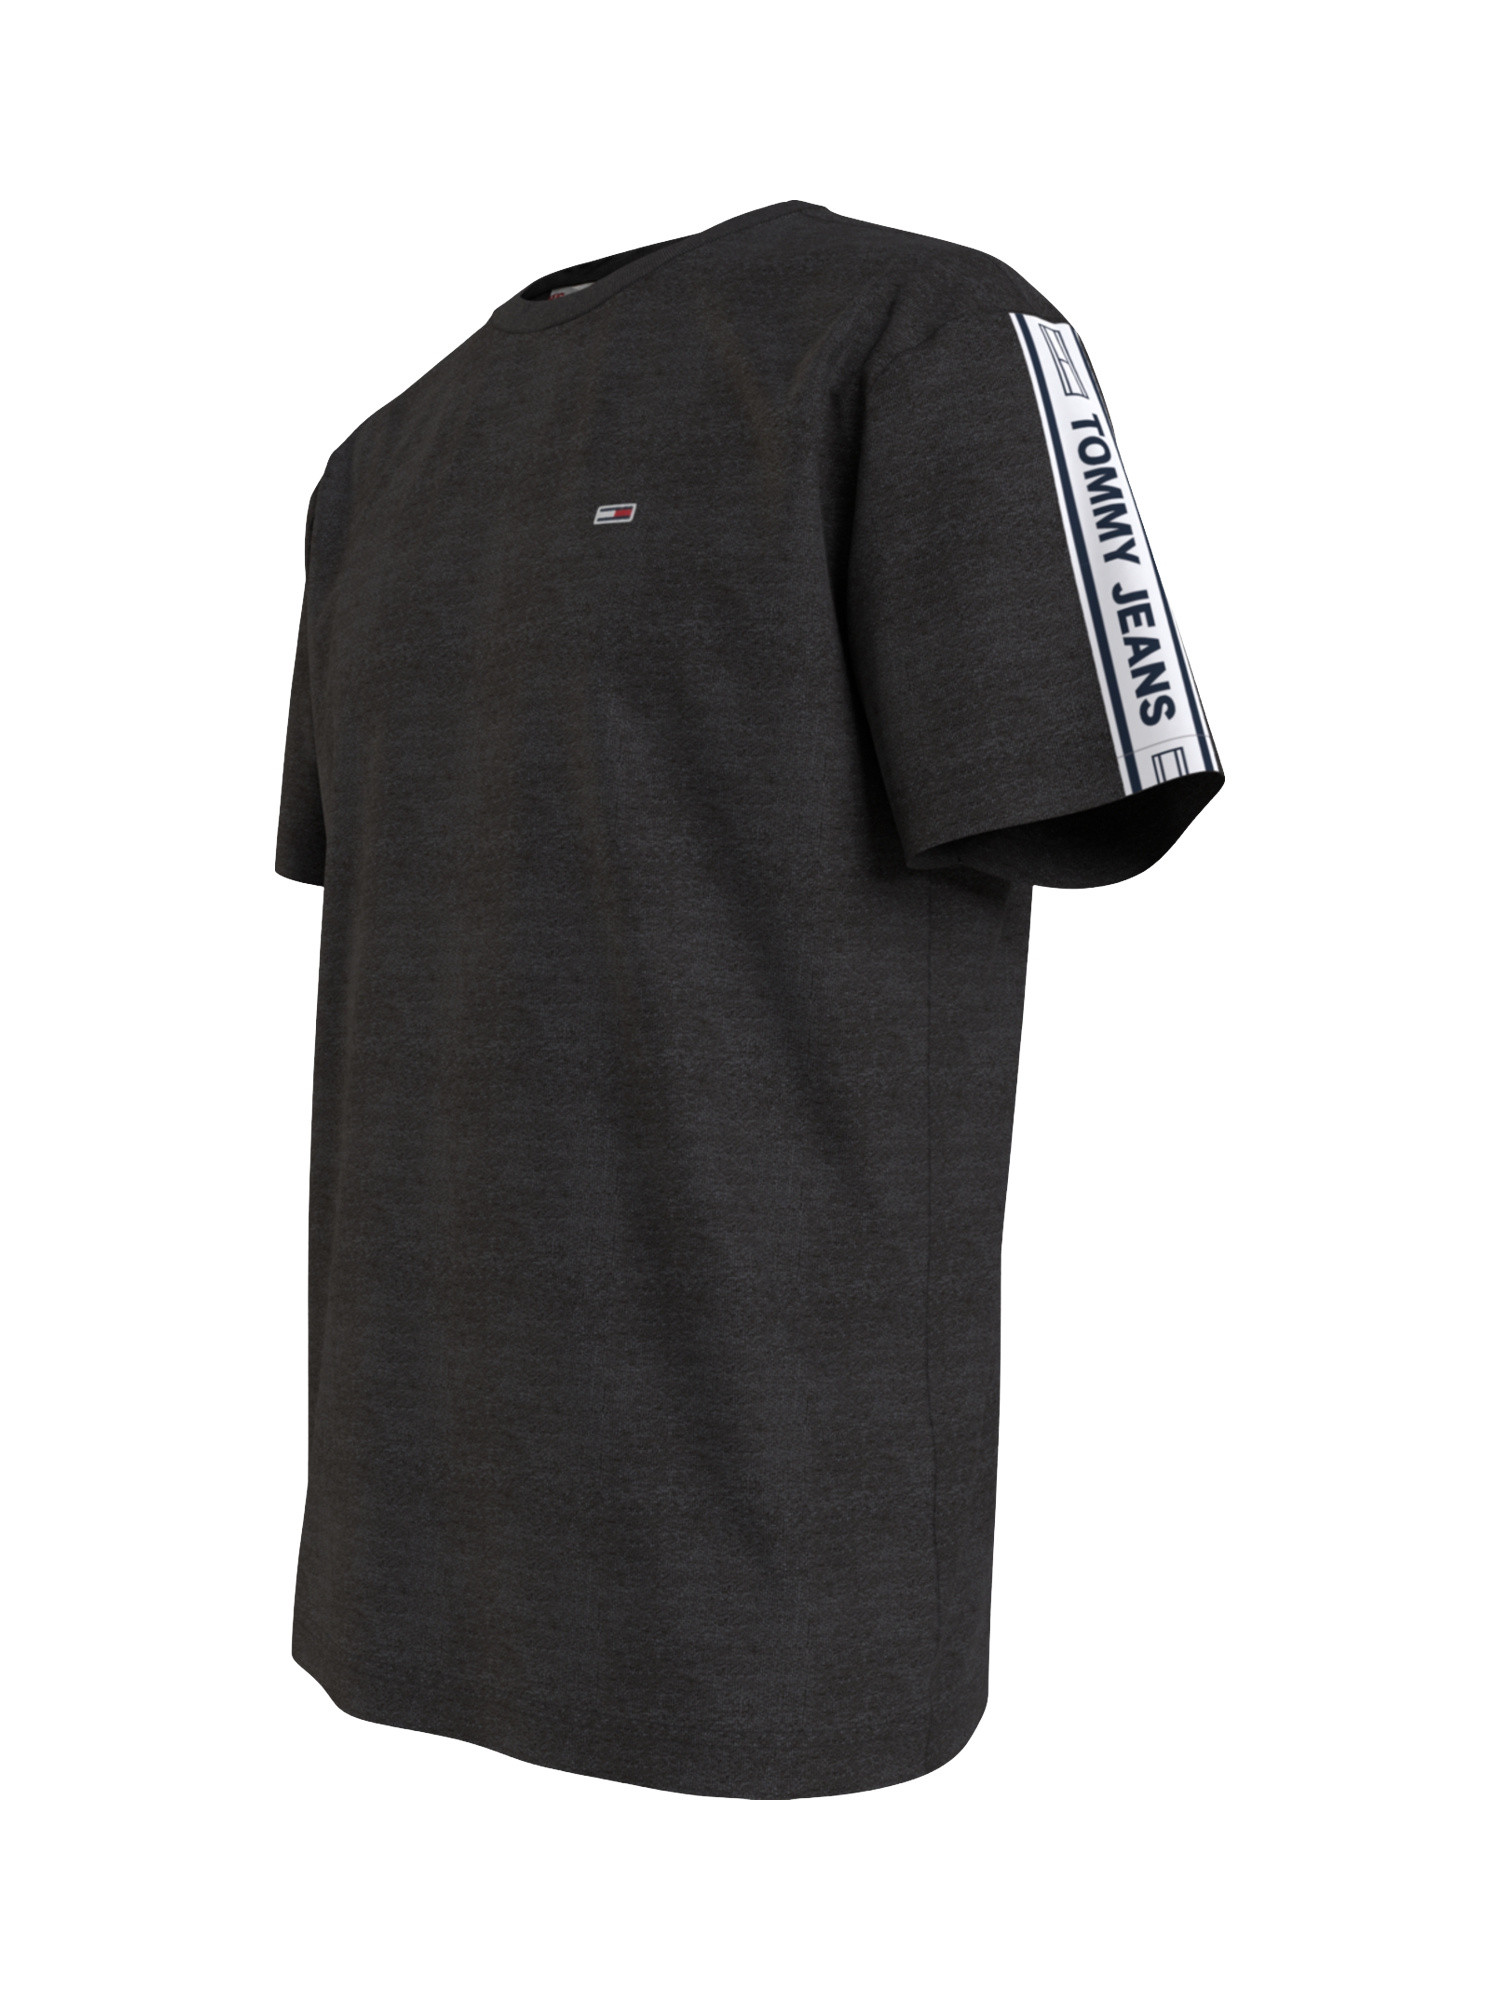 Tape t-shirt, Grey, large image number 3